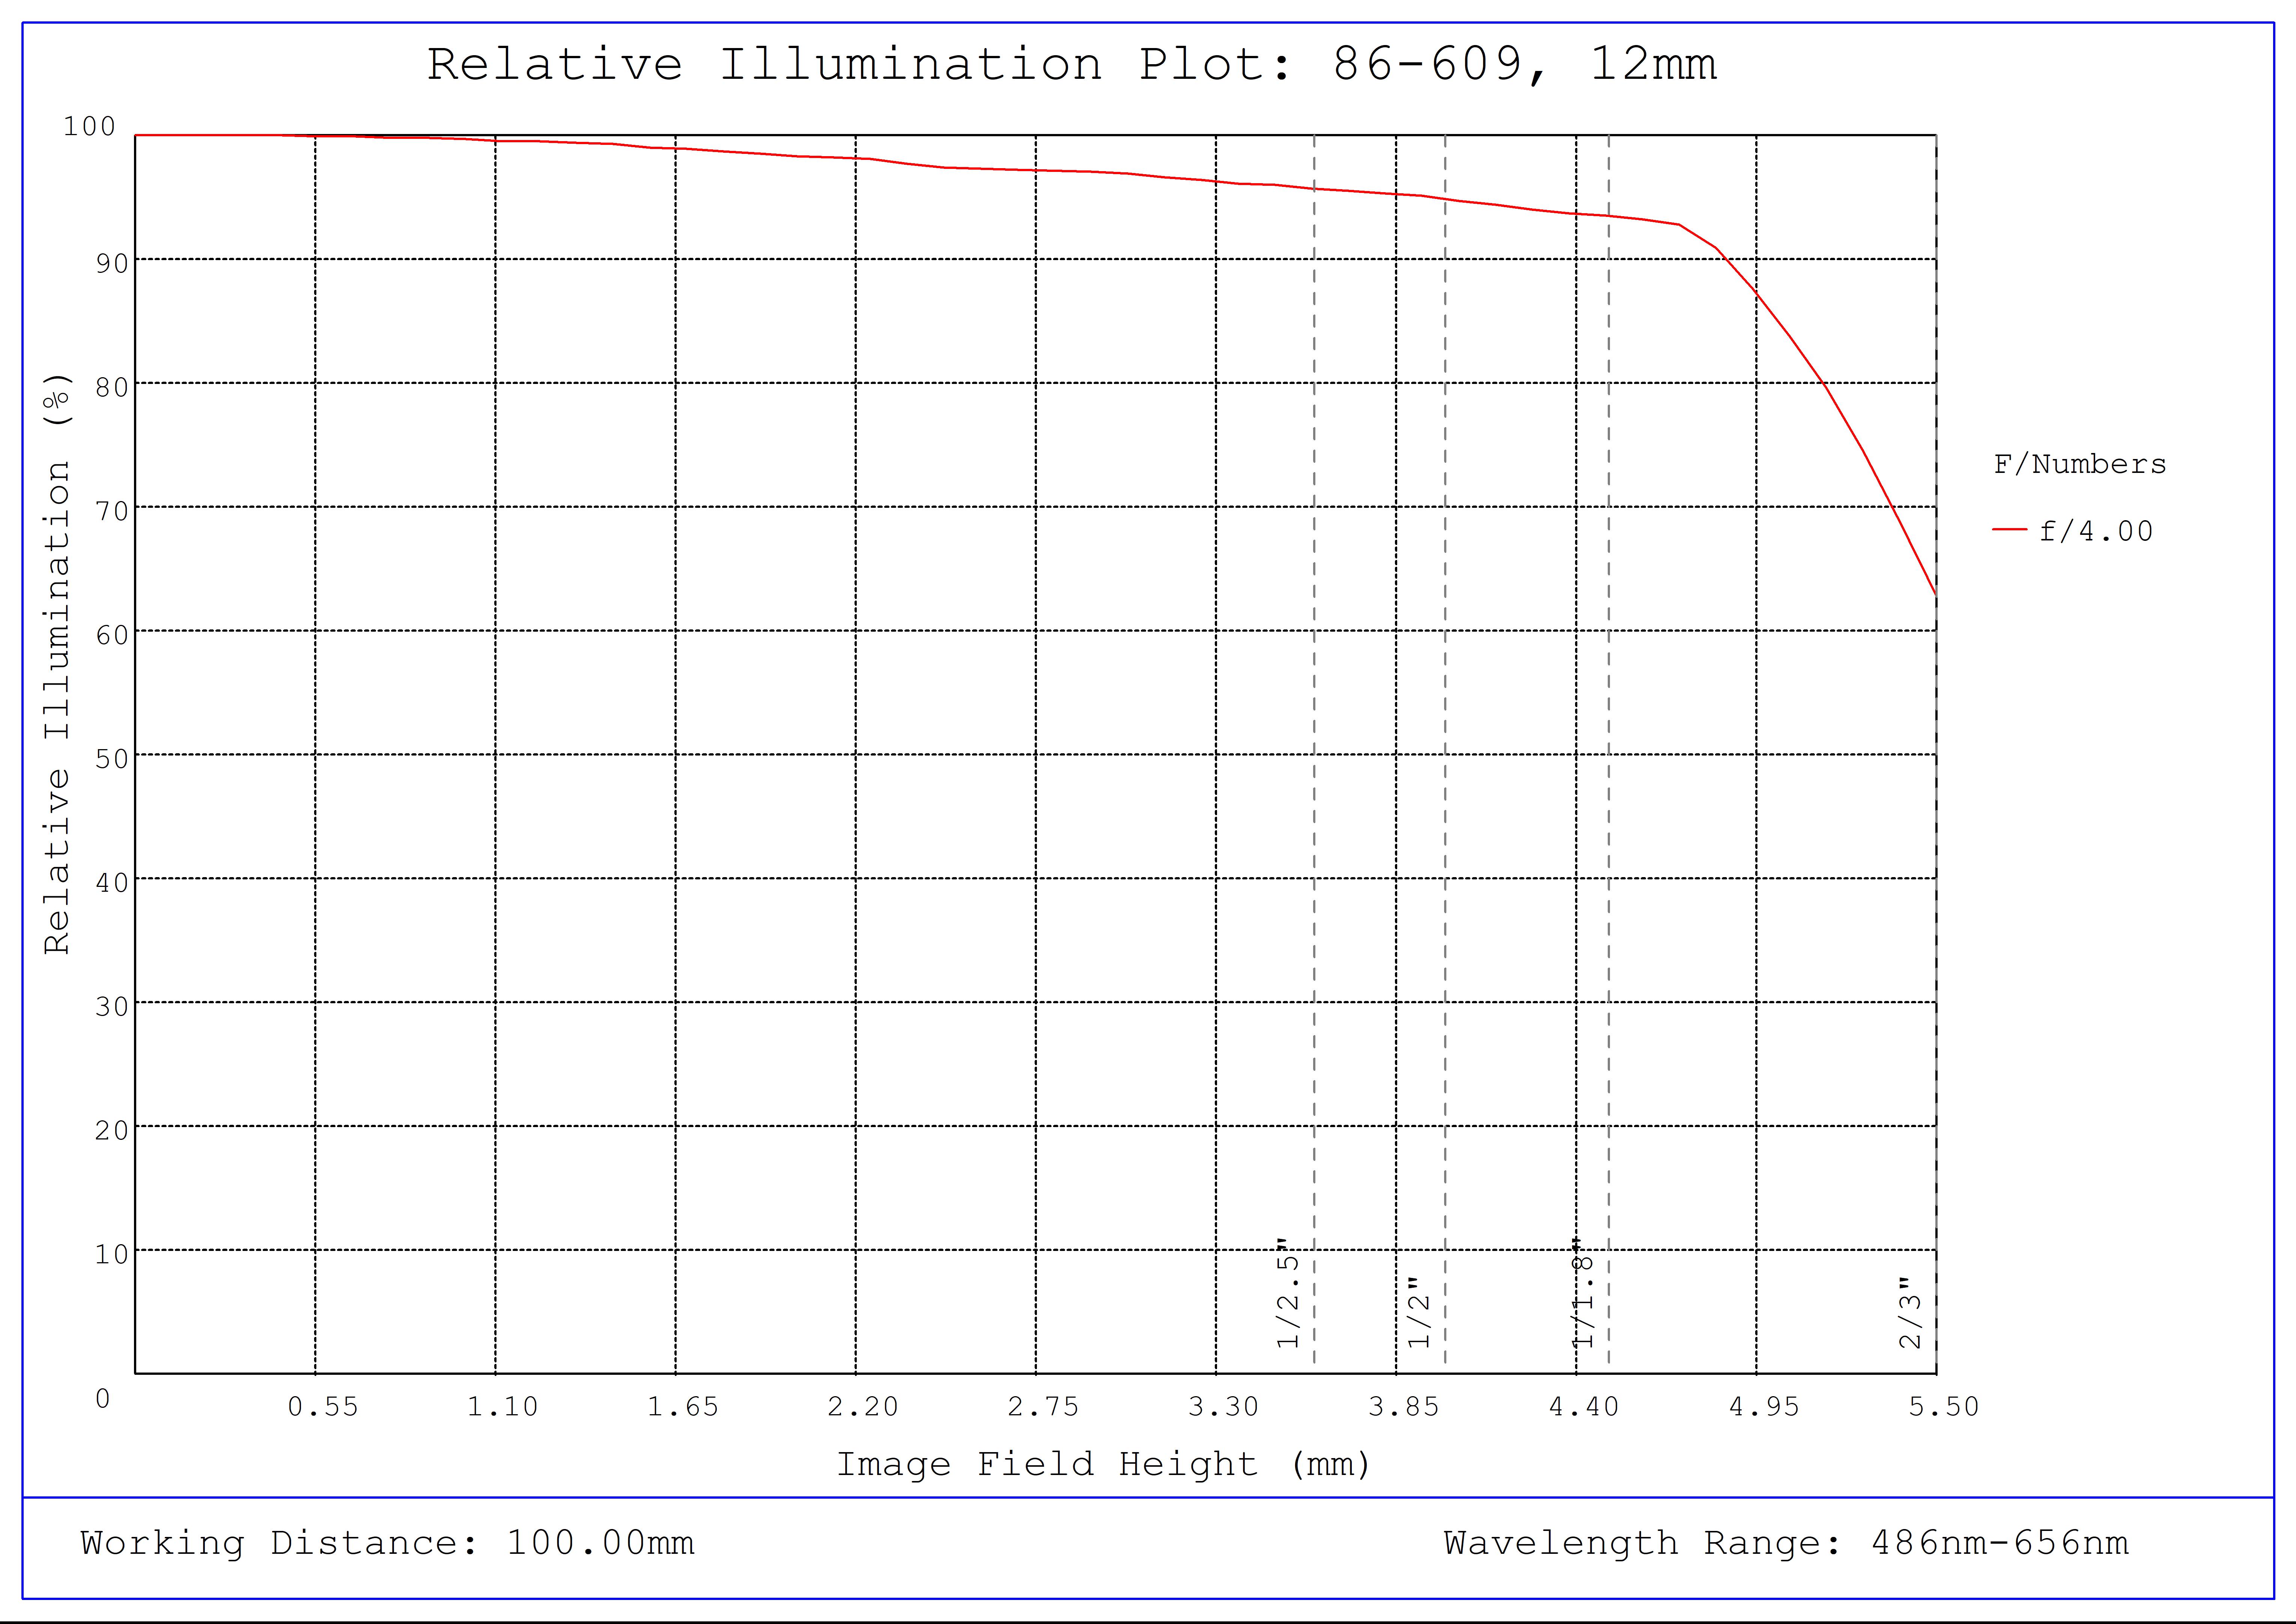 #86-609, 12mm, f/4 Ci Series Fixed Focal Length Lens, Relative Illumination Plot